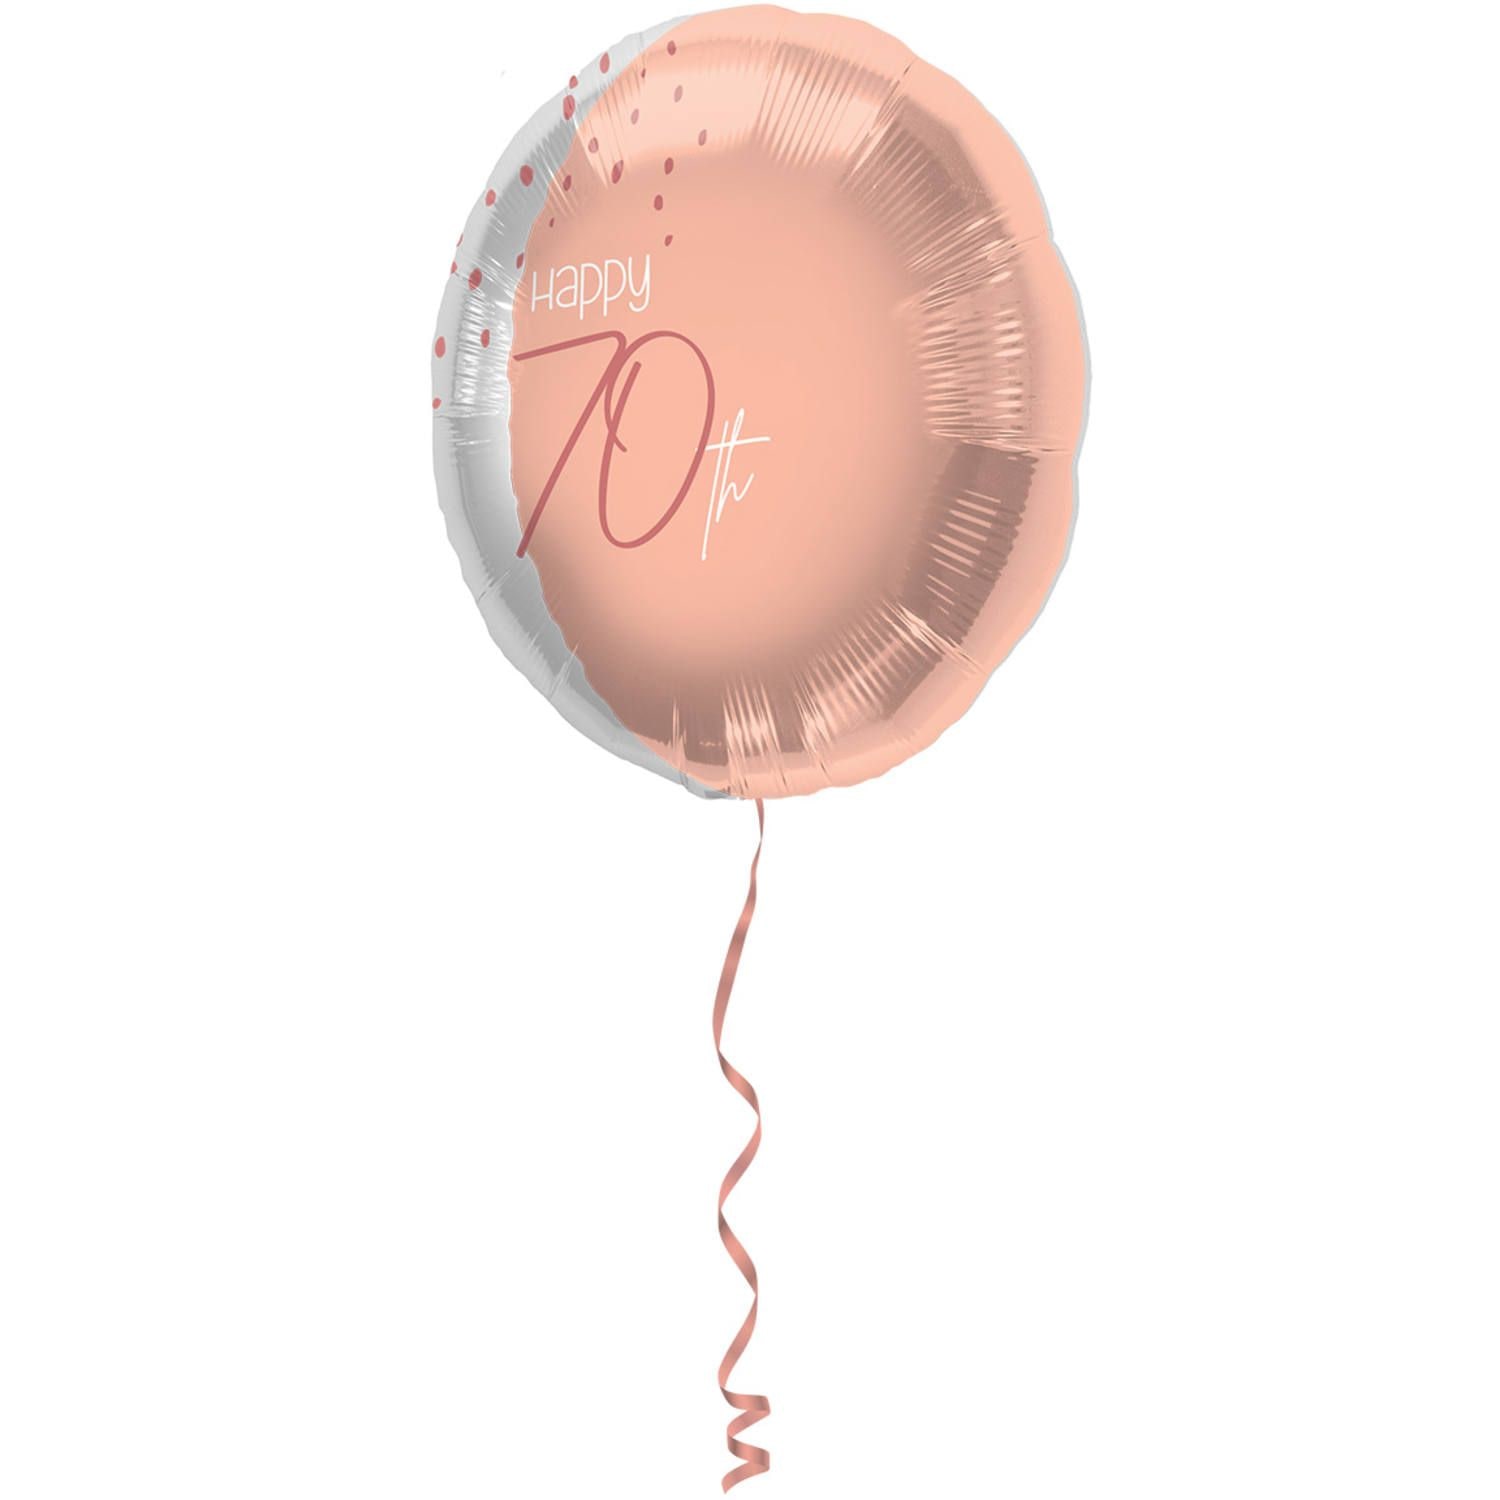 Folieballon elegant 70 jaar pink